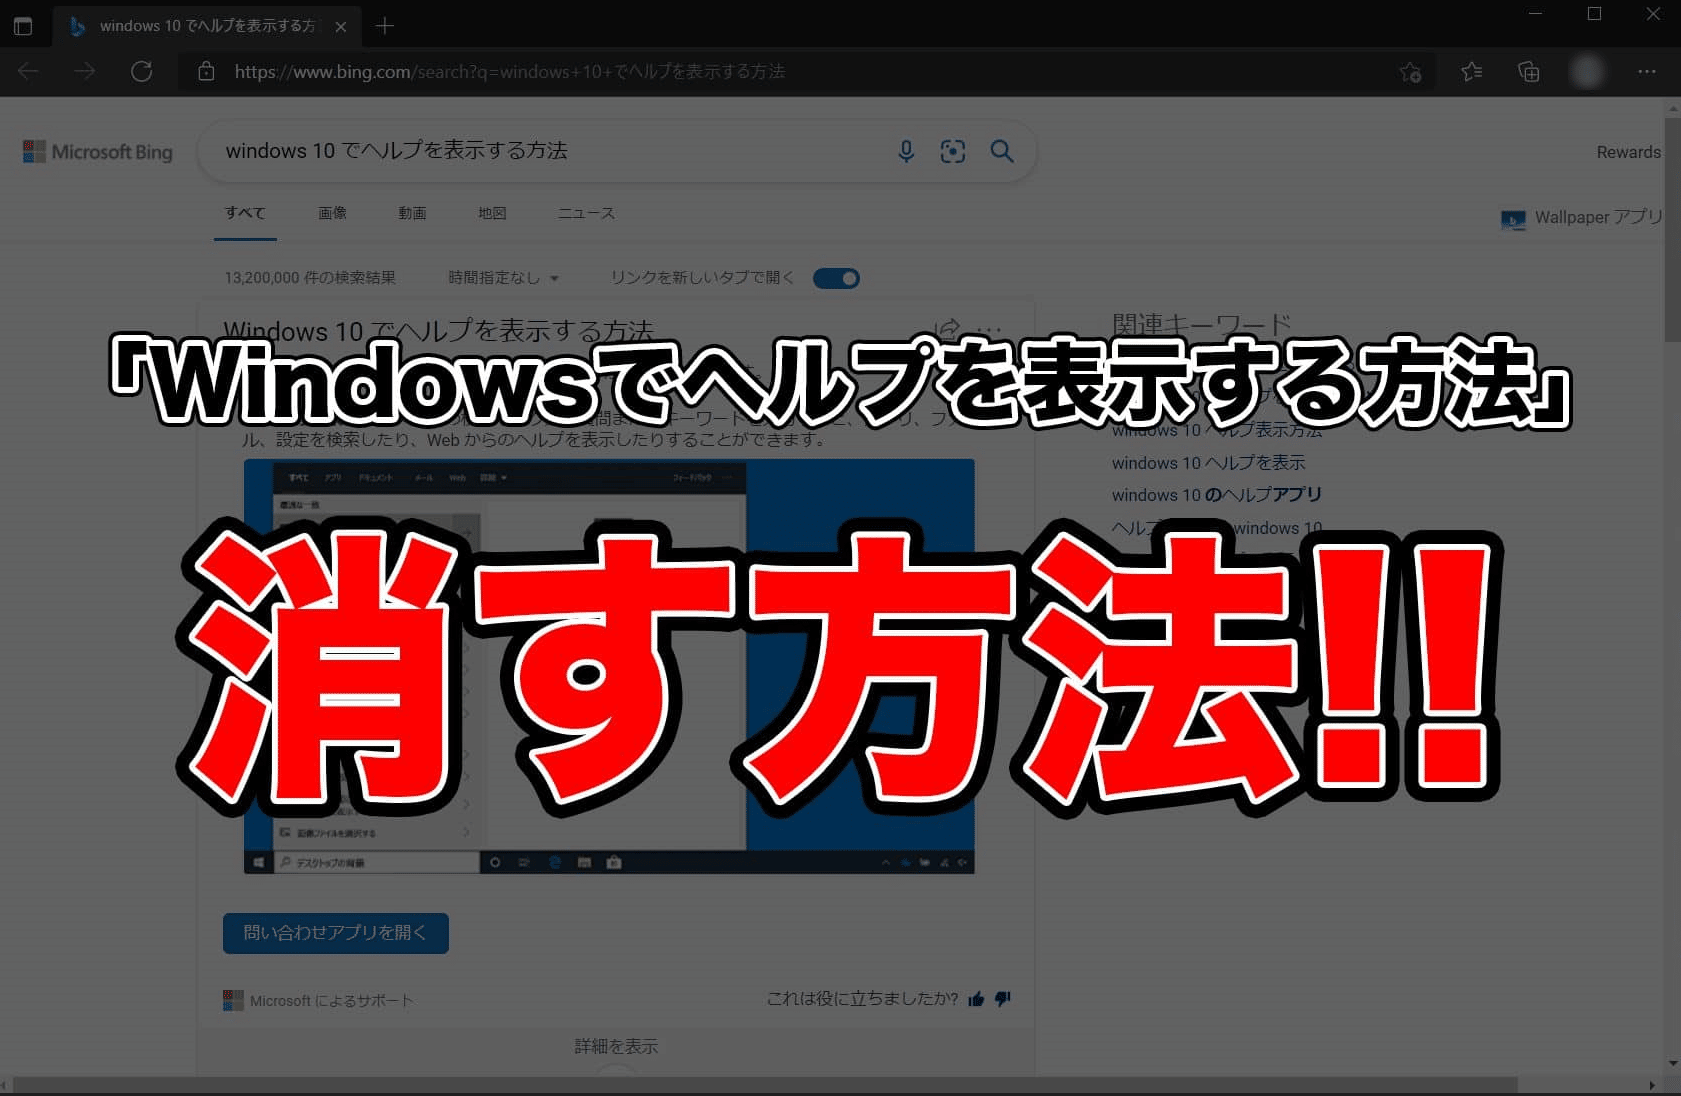 Screenshot 8 - 超害悪「Windowsでヘルプを表示する方法」を無効化する方法